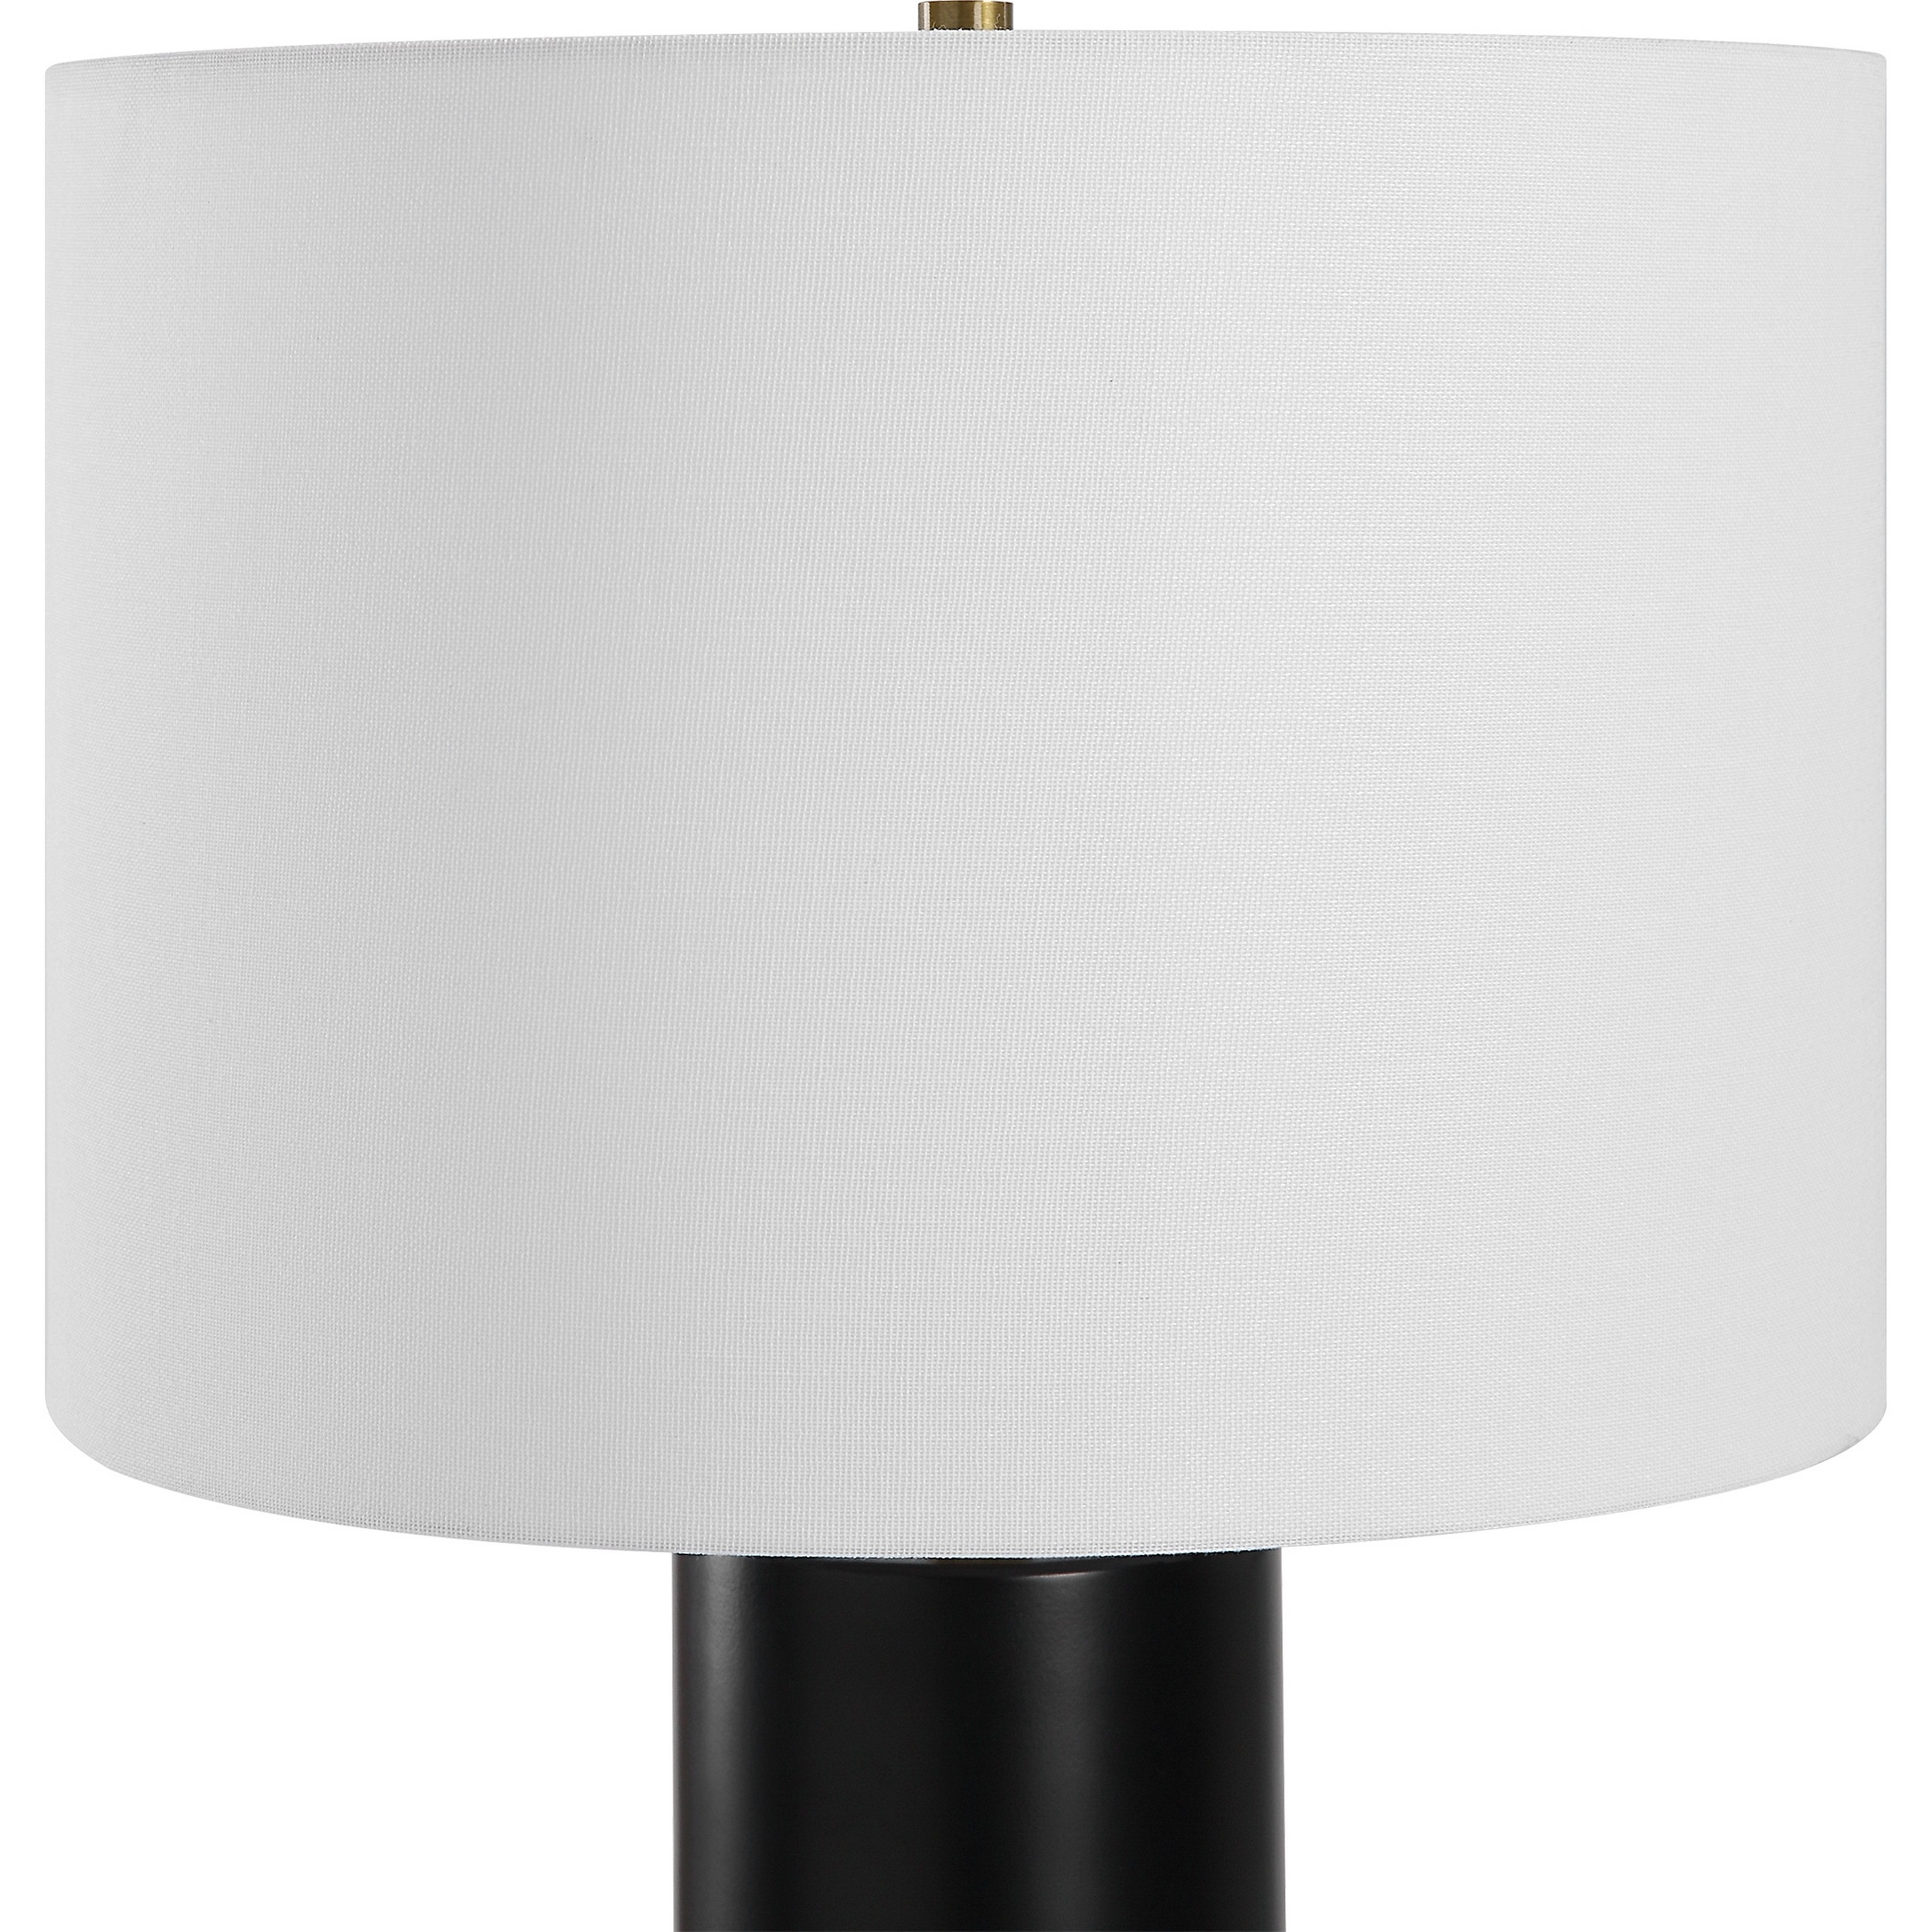 27 Inch Table Lamp, White Round Hardback Drum Shade, Black, Gold Accents -Saltoro Sherpi